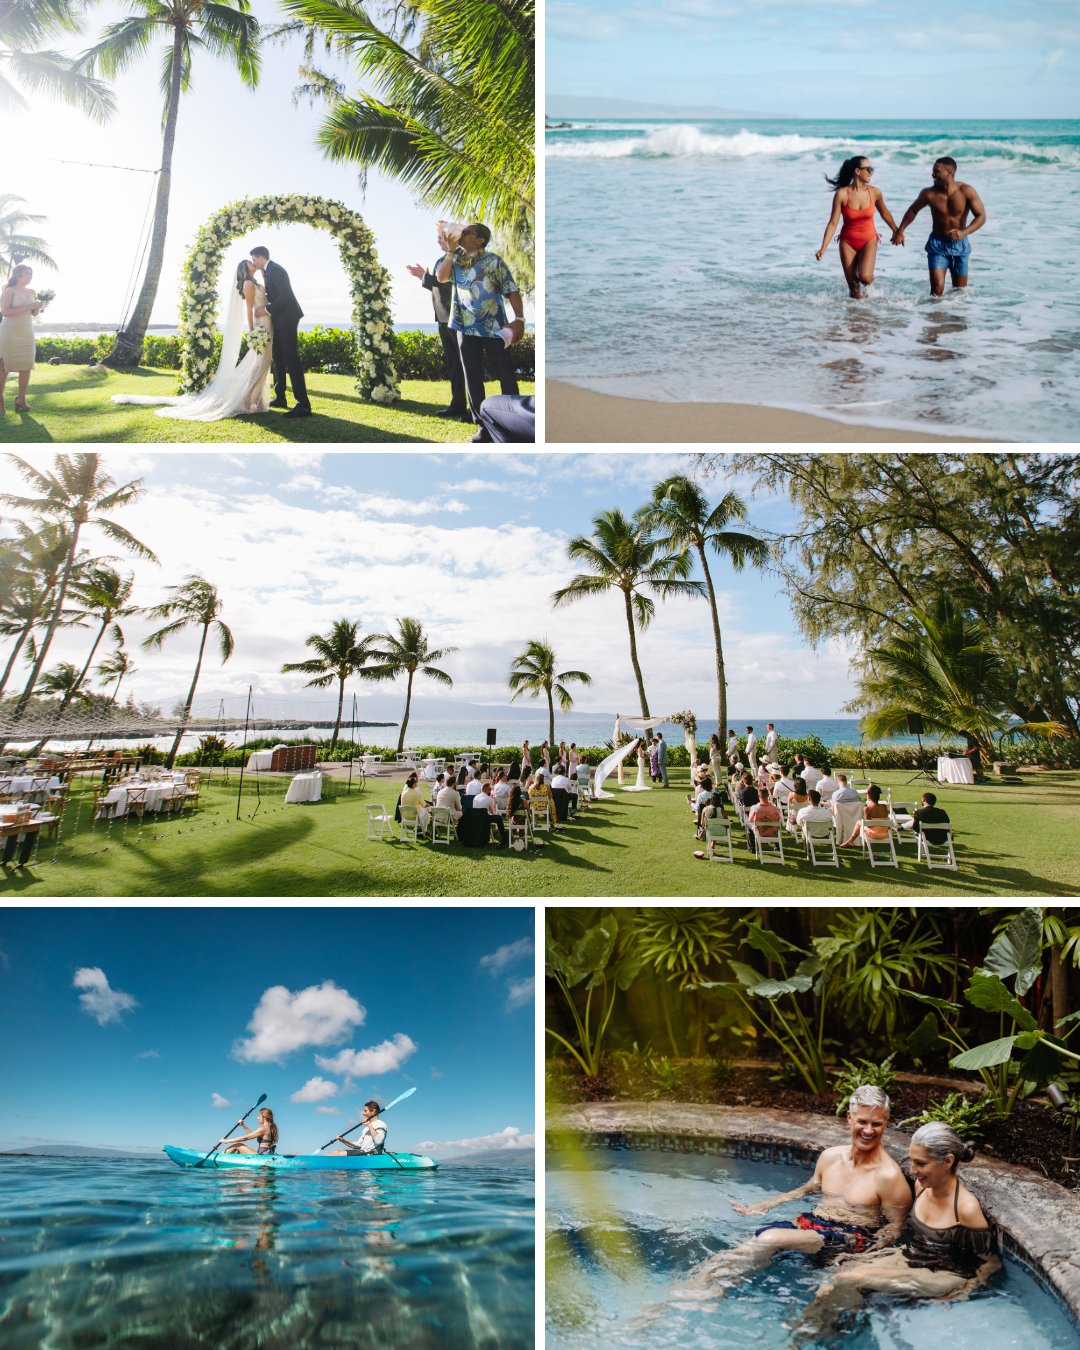 Maui wedding setups, couples enjoying the ocean